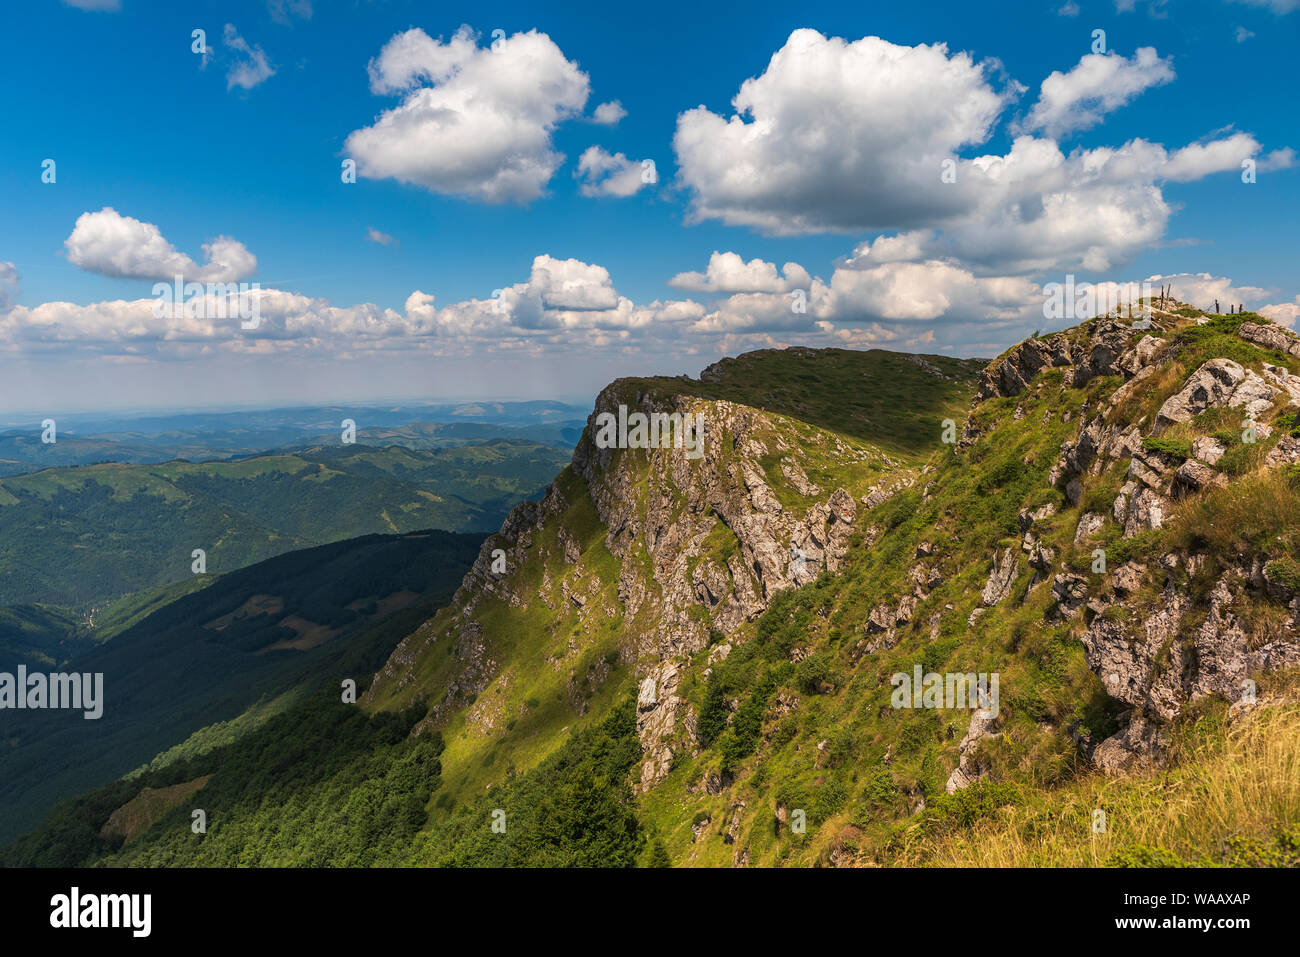 Summer in Central Balkan national park in Old mountain ( Stara planina ), Bulgaria. Panoramic breathtaking photo. Stock Photo